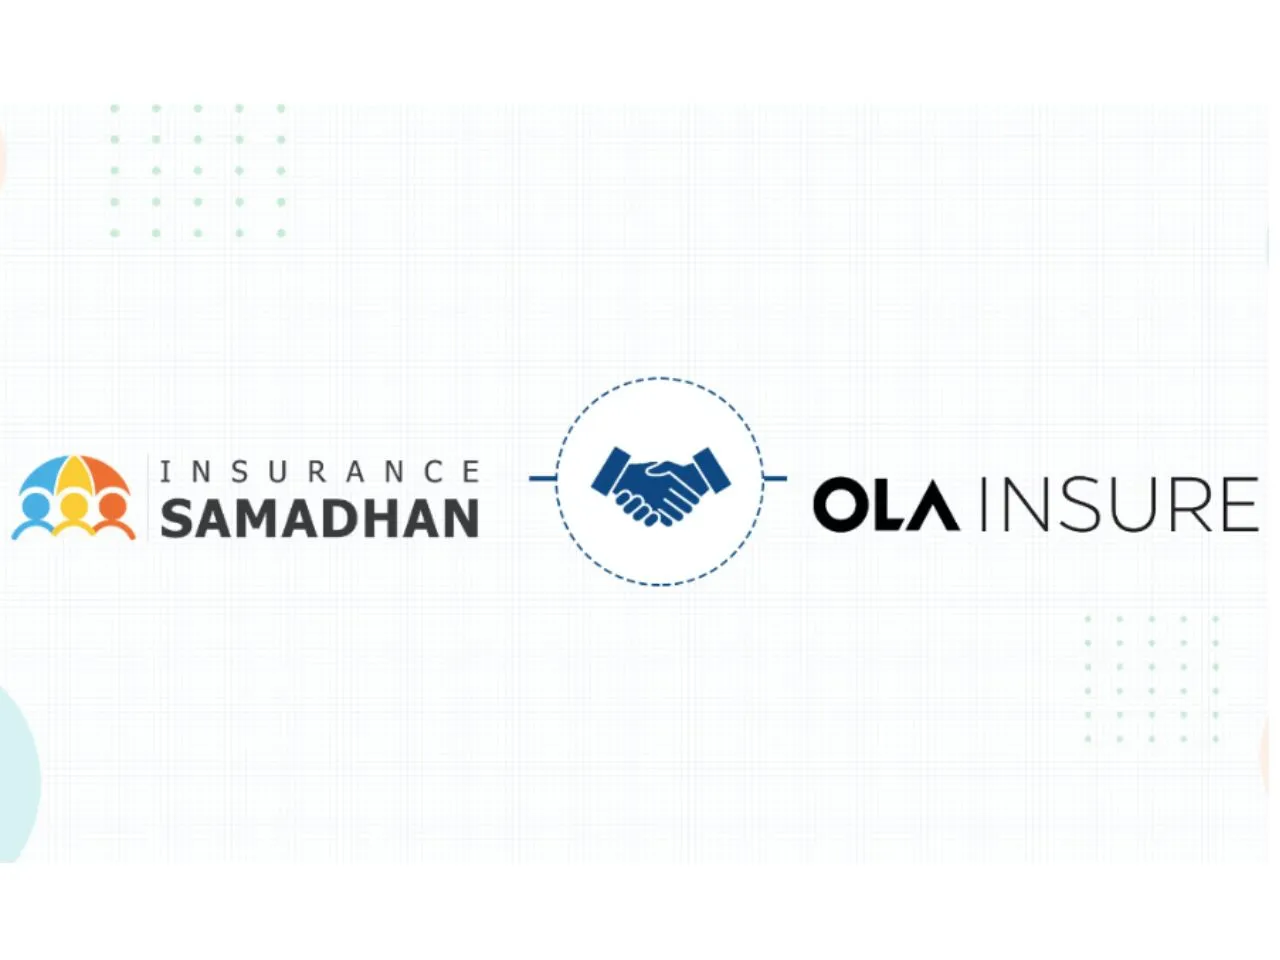 Ola Insurance partners with Insurance Samadhn